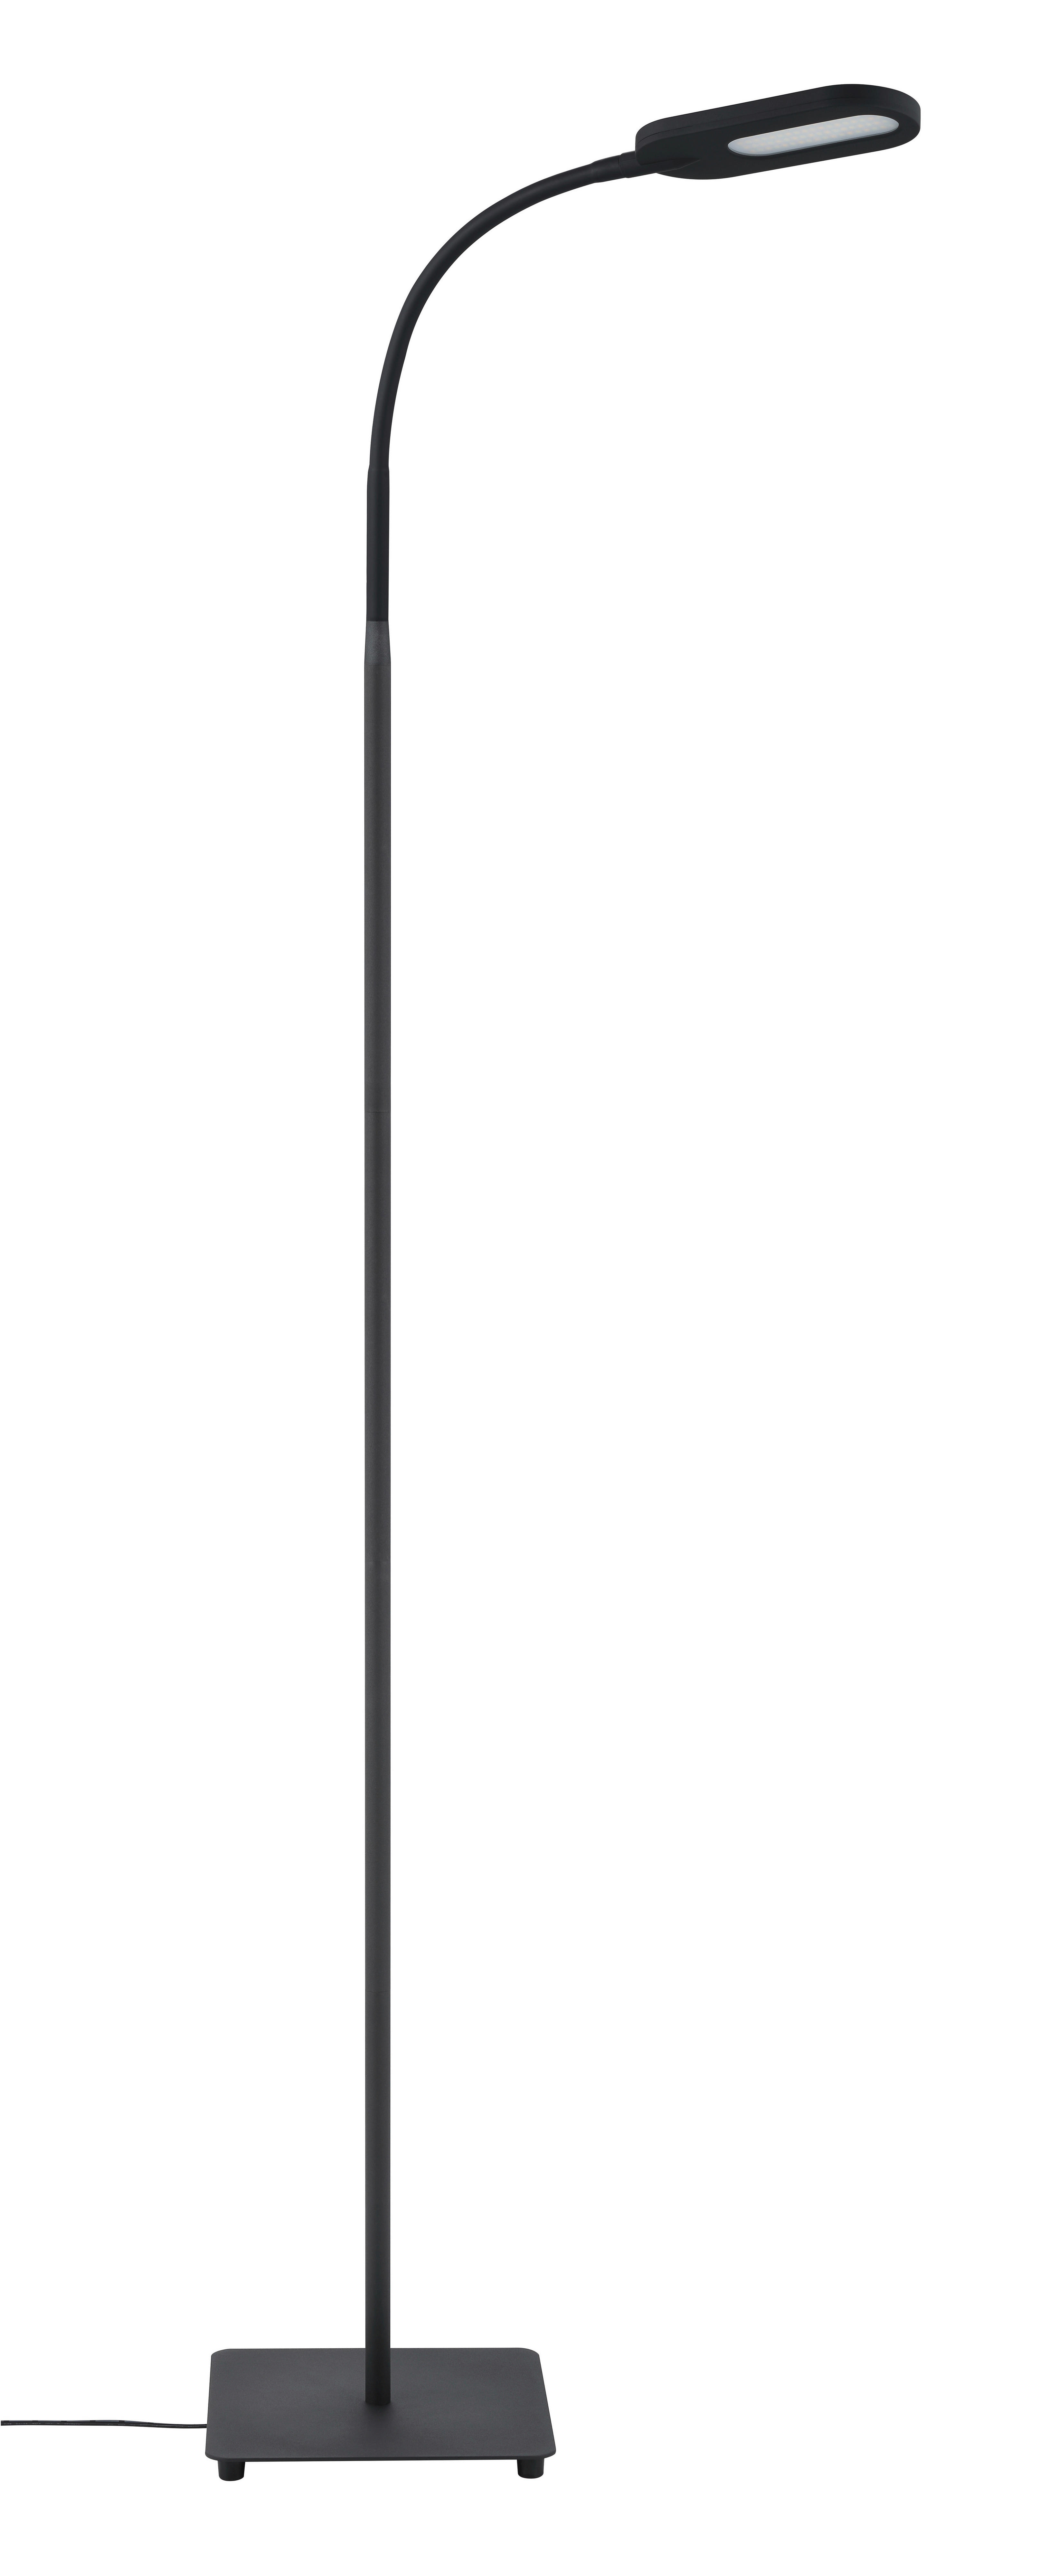 LED STOJACIA LAMPA, 21/128 cm  - čierna, Basics, kov (21/128cm) - Novel